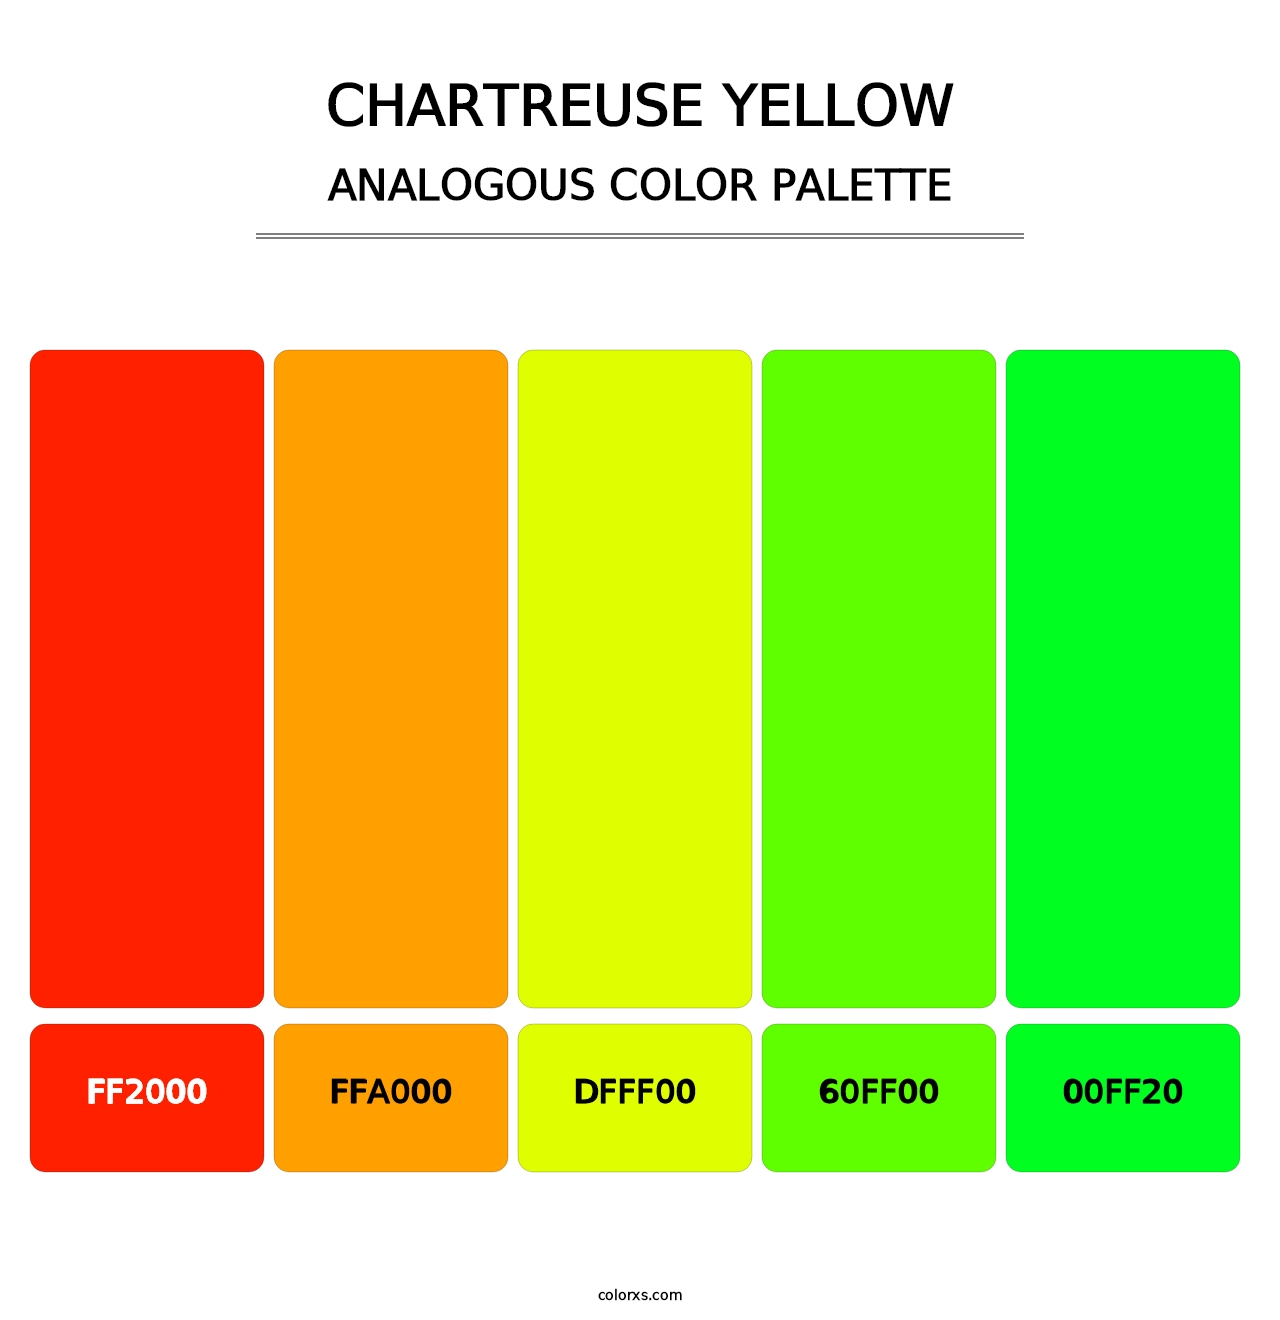 Chartreuse Yellow - Analogous Color Palette